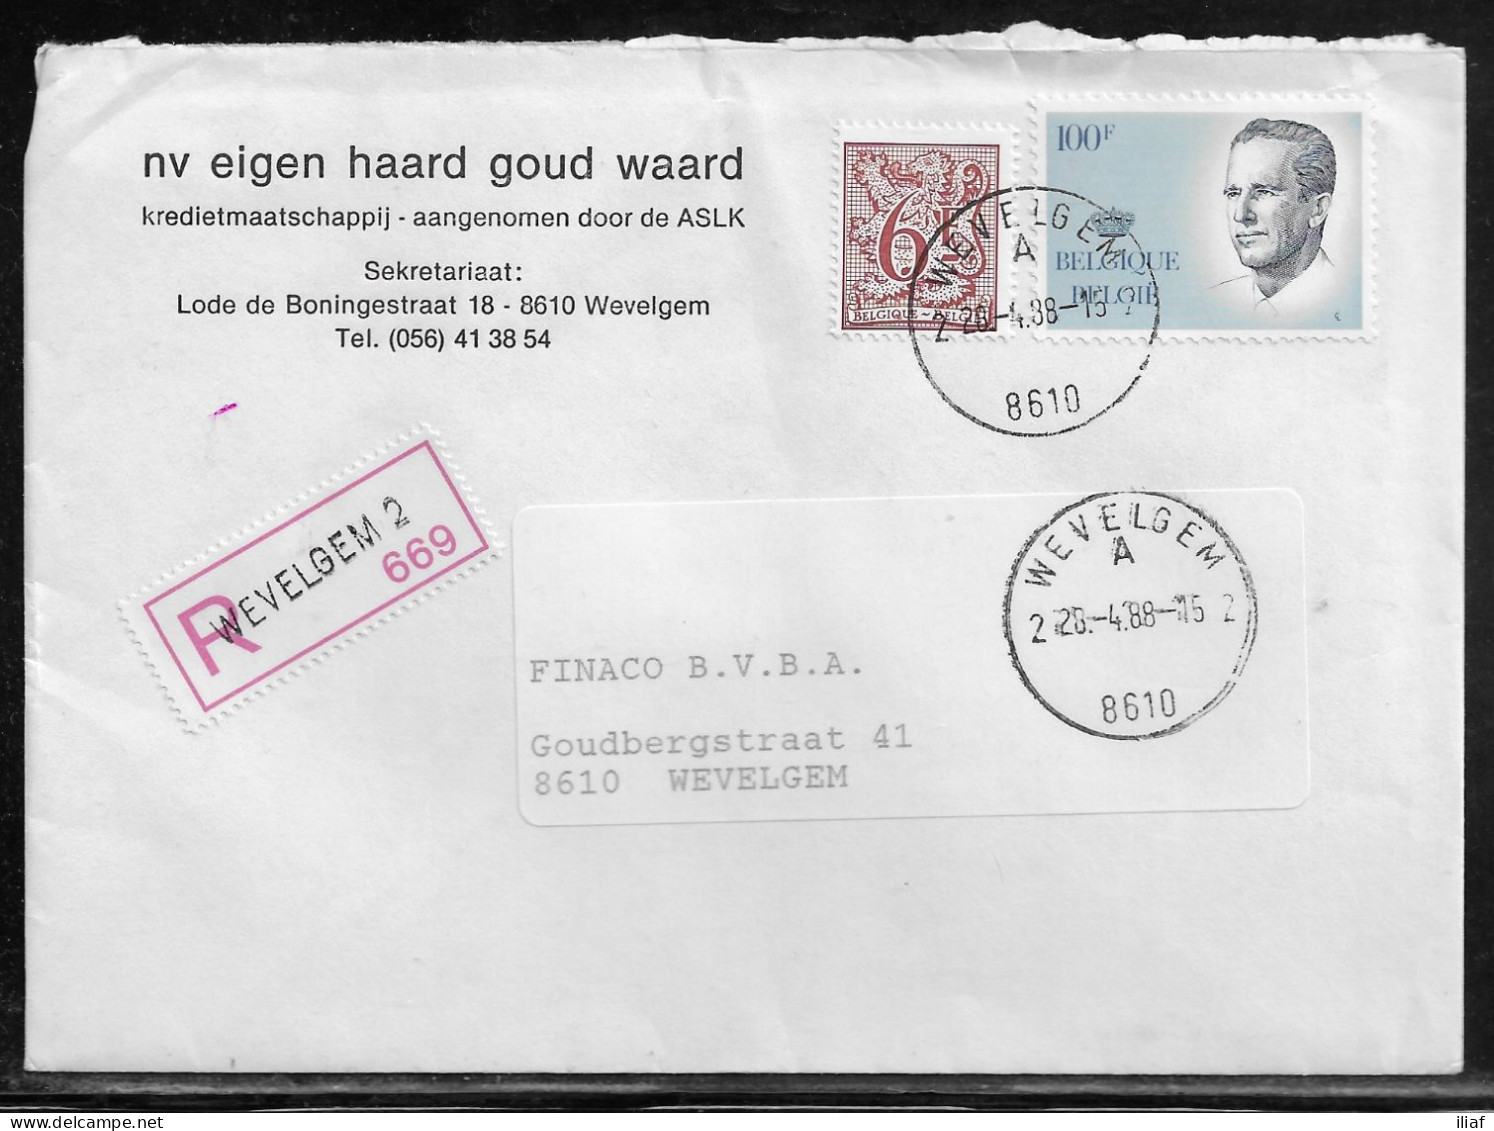 Belgium. Stamps Sc. 976a, Sc. 1103 On Registered Letter, Sent From Wevelgem On 28.04.1988 For Wevelgem - Briefe U. Dokumente